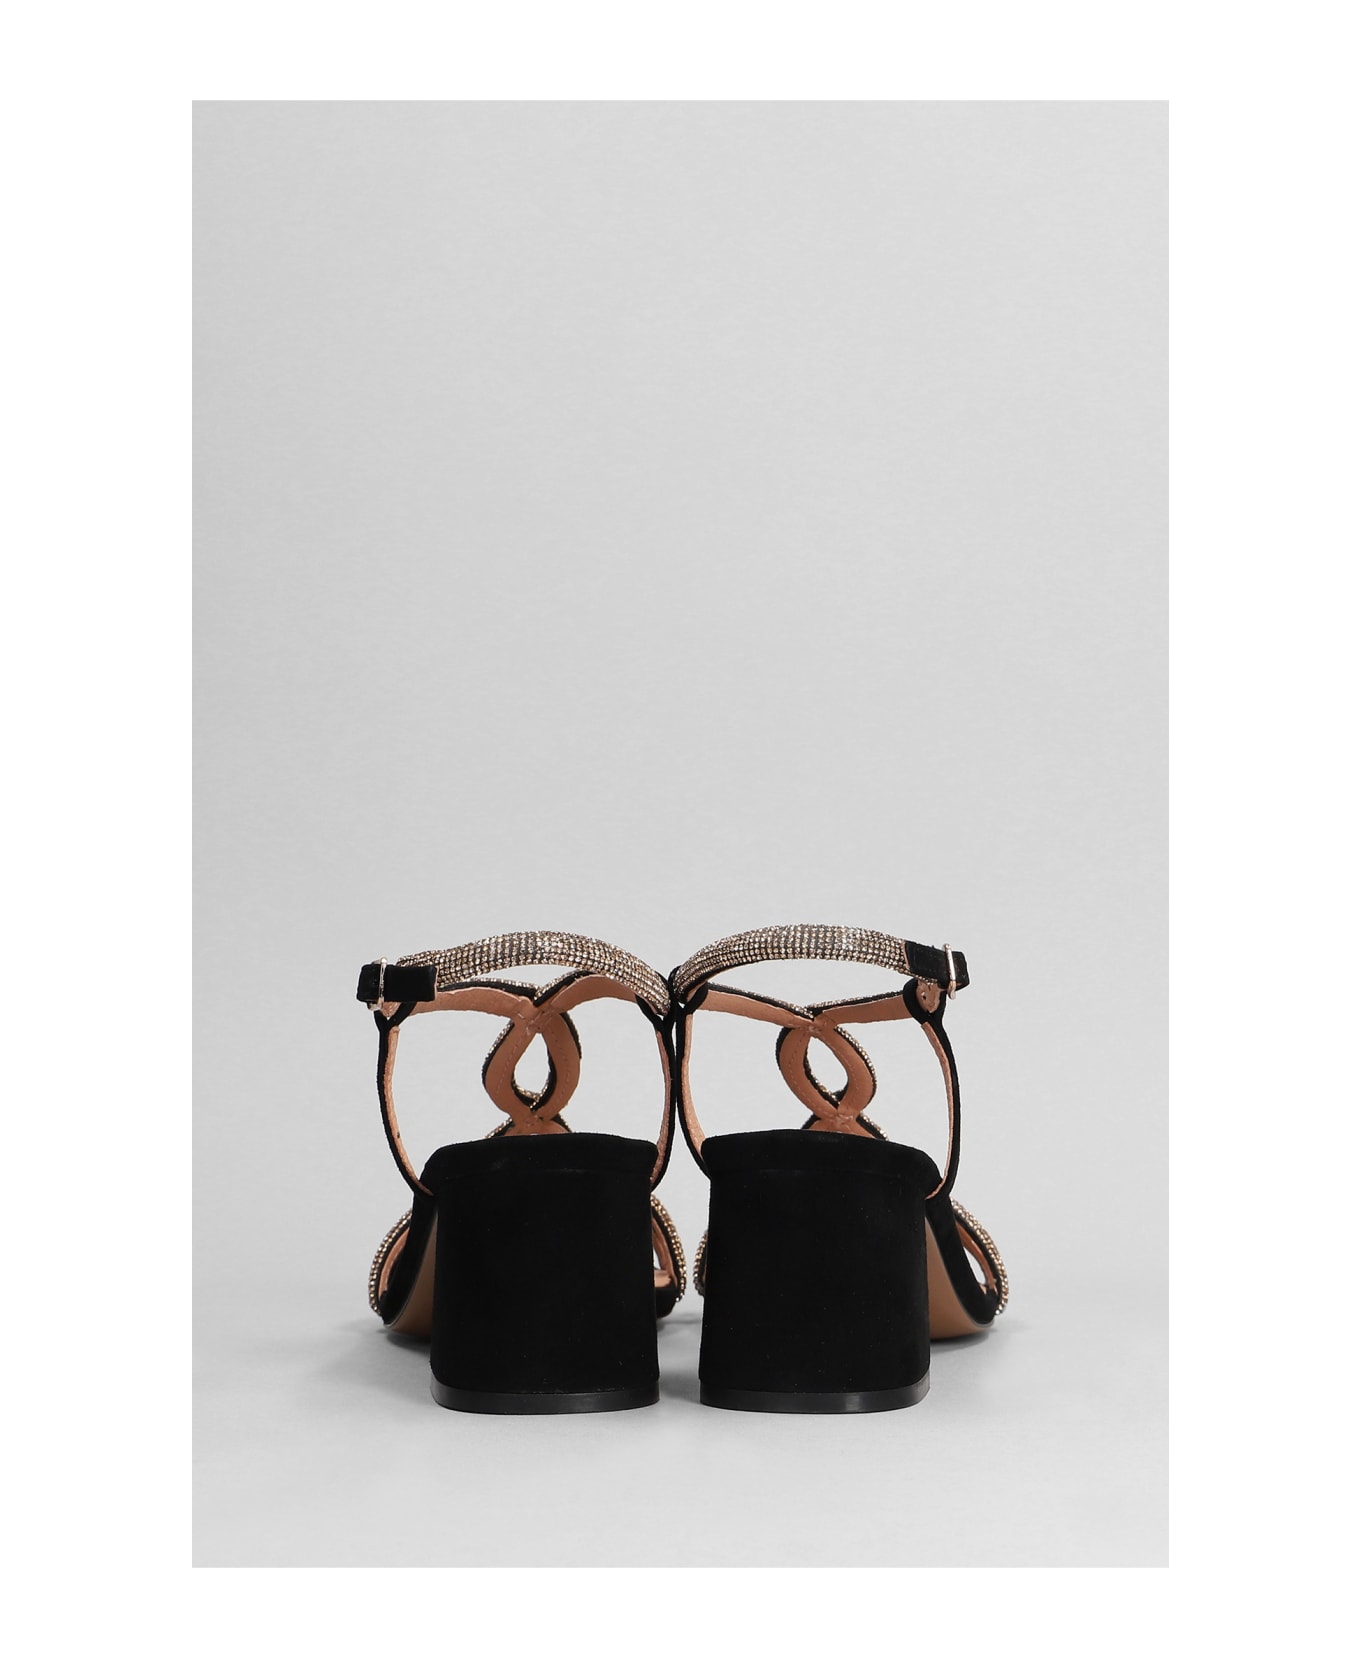 Bibi Lou Tansy 60 Sandals In Black Suede - black